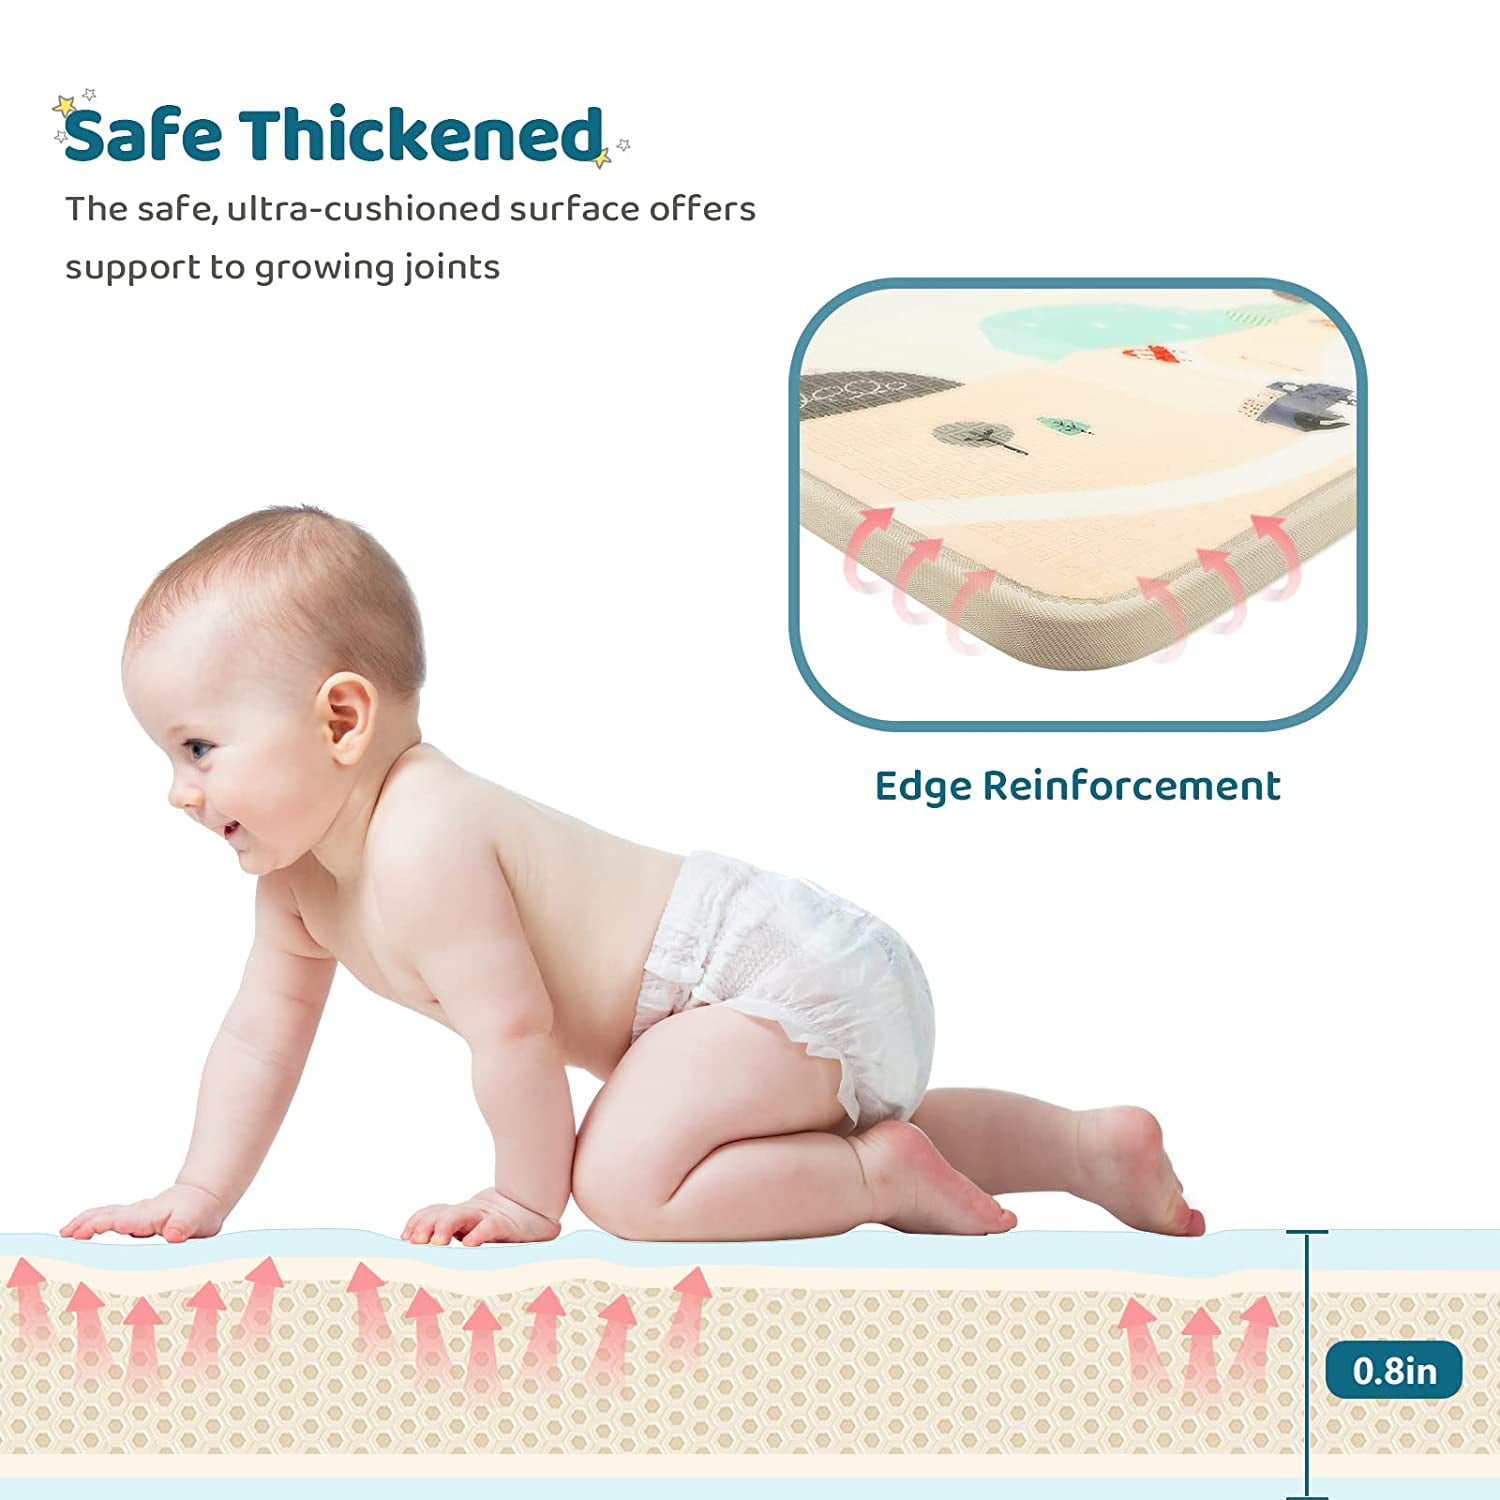 1pc Foam Floor Mat For Crawling & Exercise, Anti-Slip Padded Baby